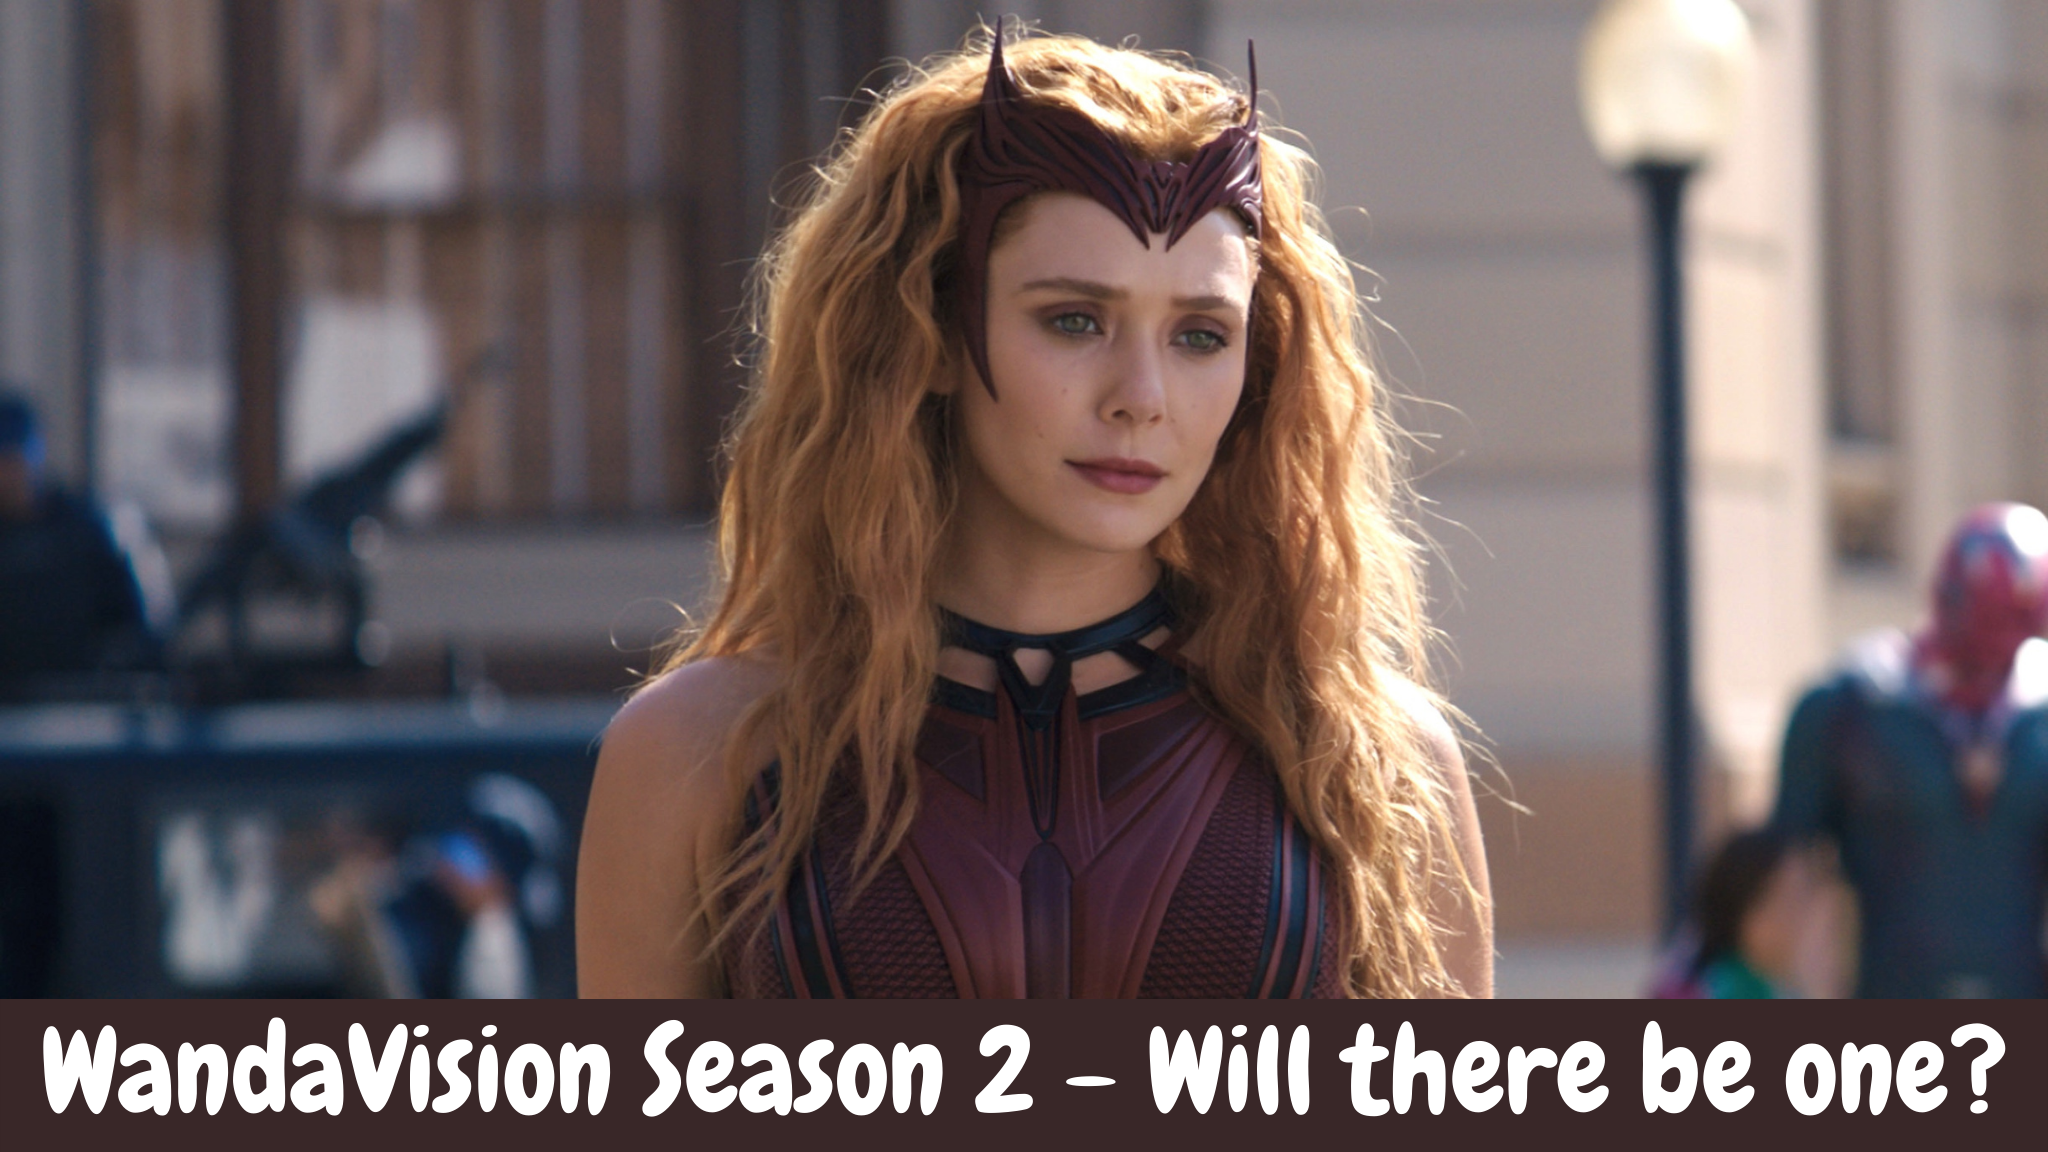 WandaVision Season 2 - Will there be one?